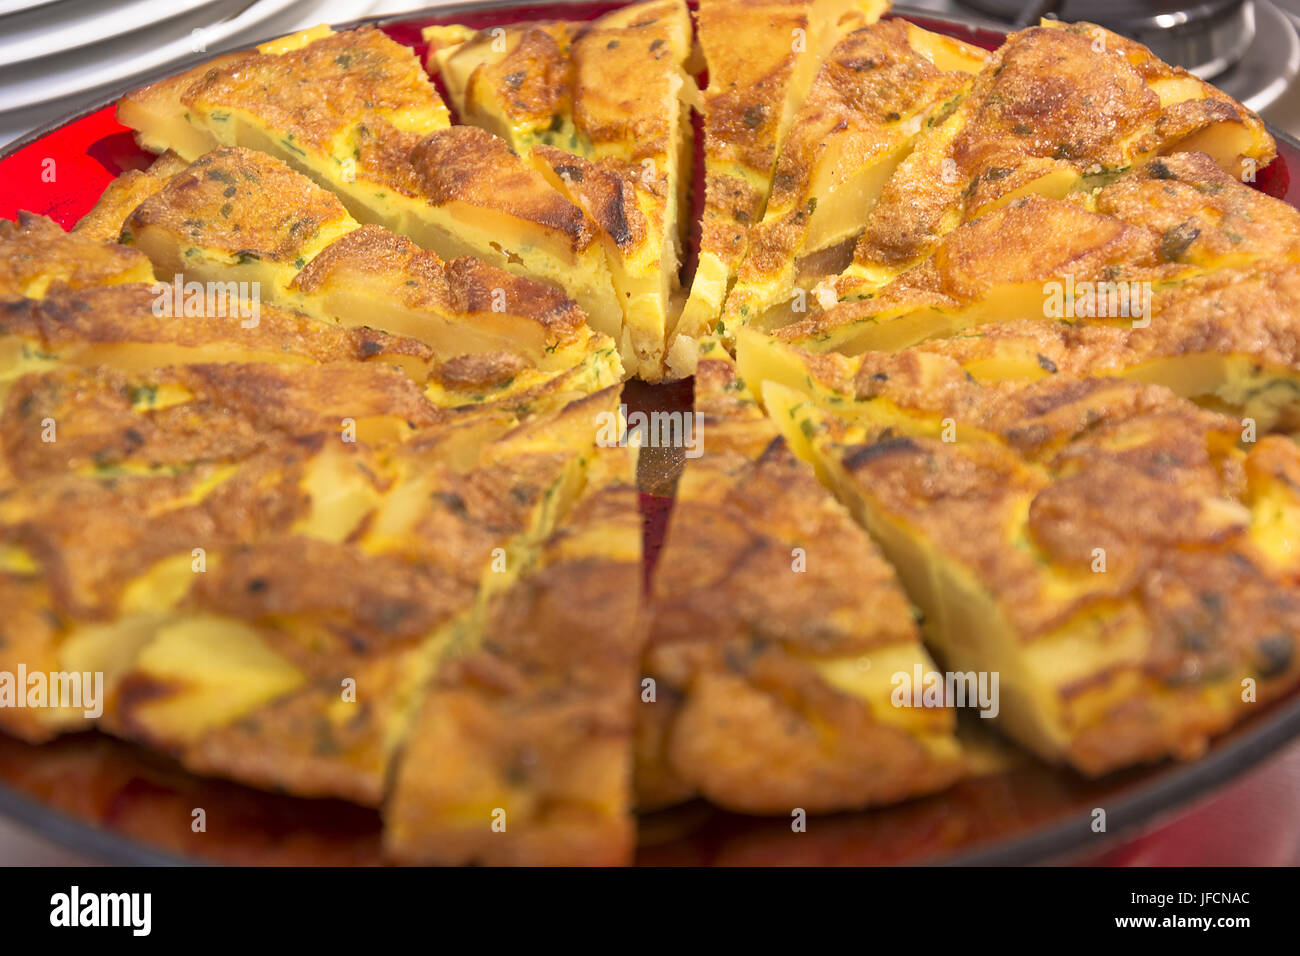 Potato omelette on slices Stock Photo